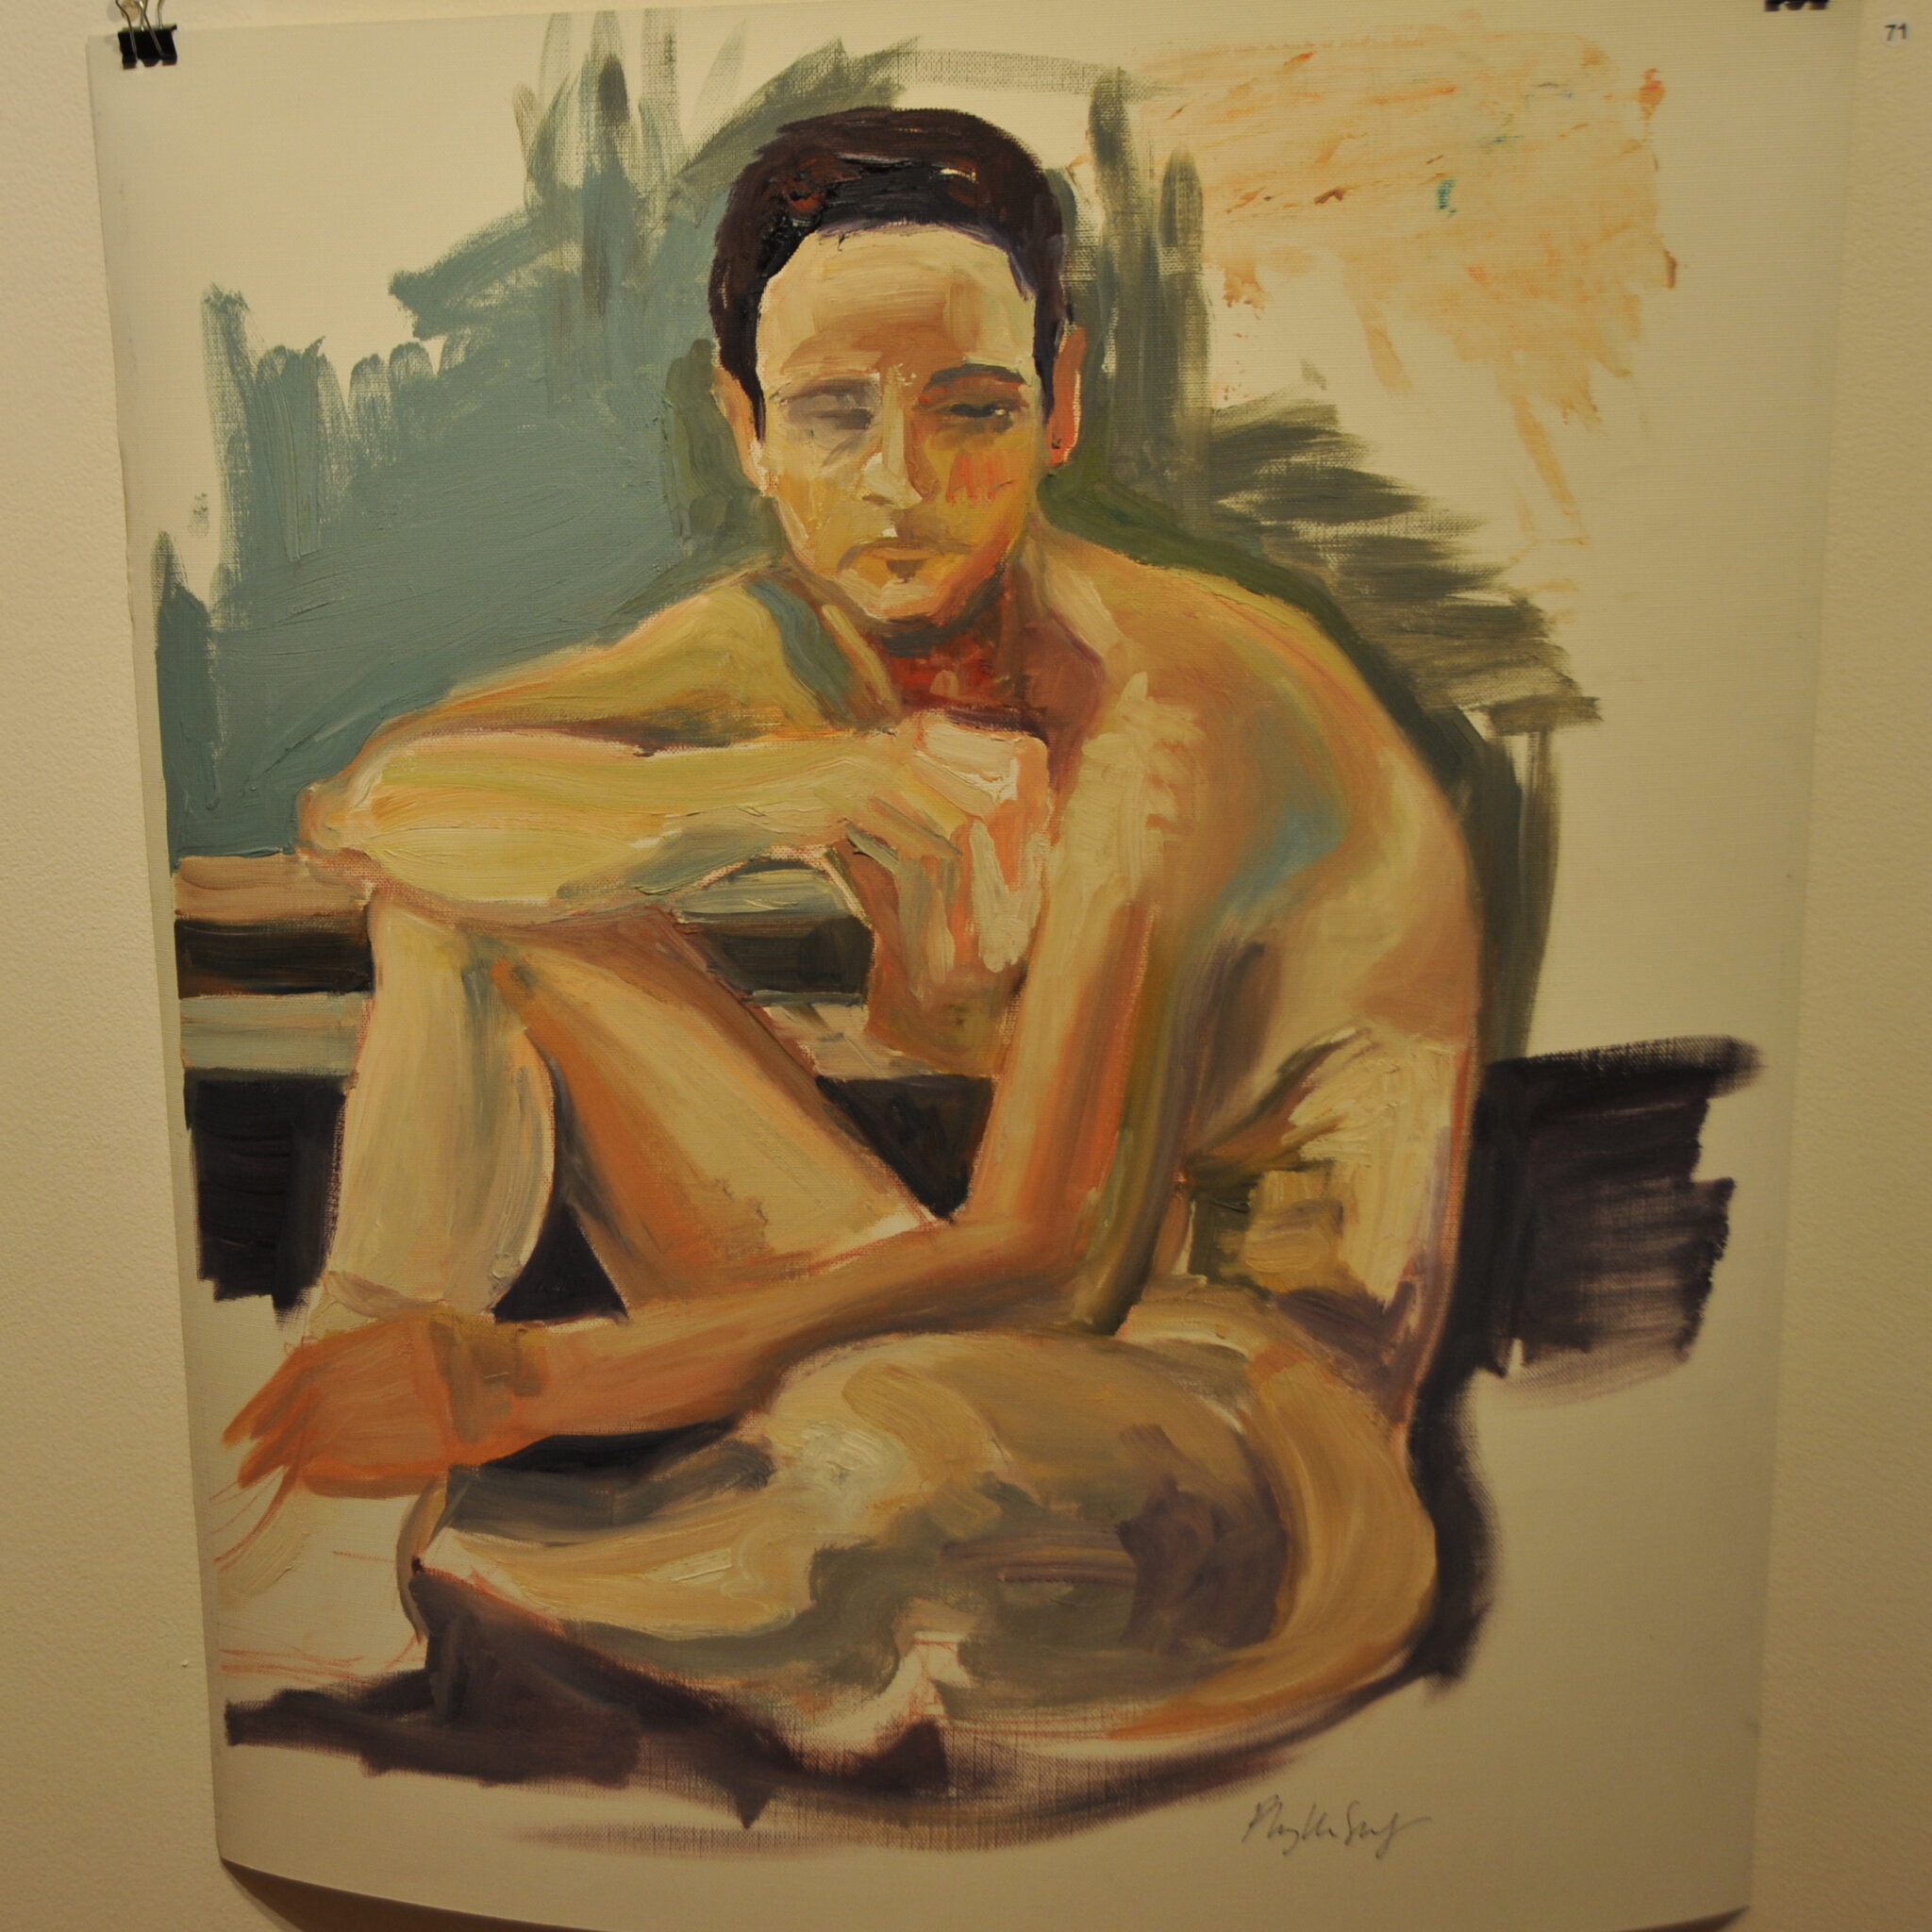 Shafer Shares ‘Figure Studies’ in Bristlecone Gallery